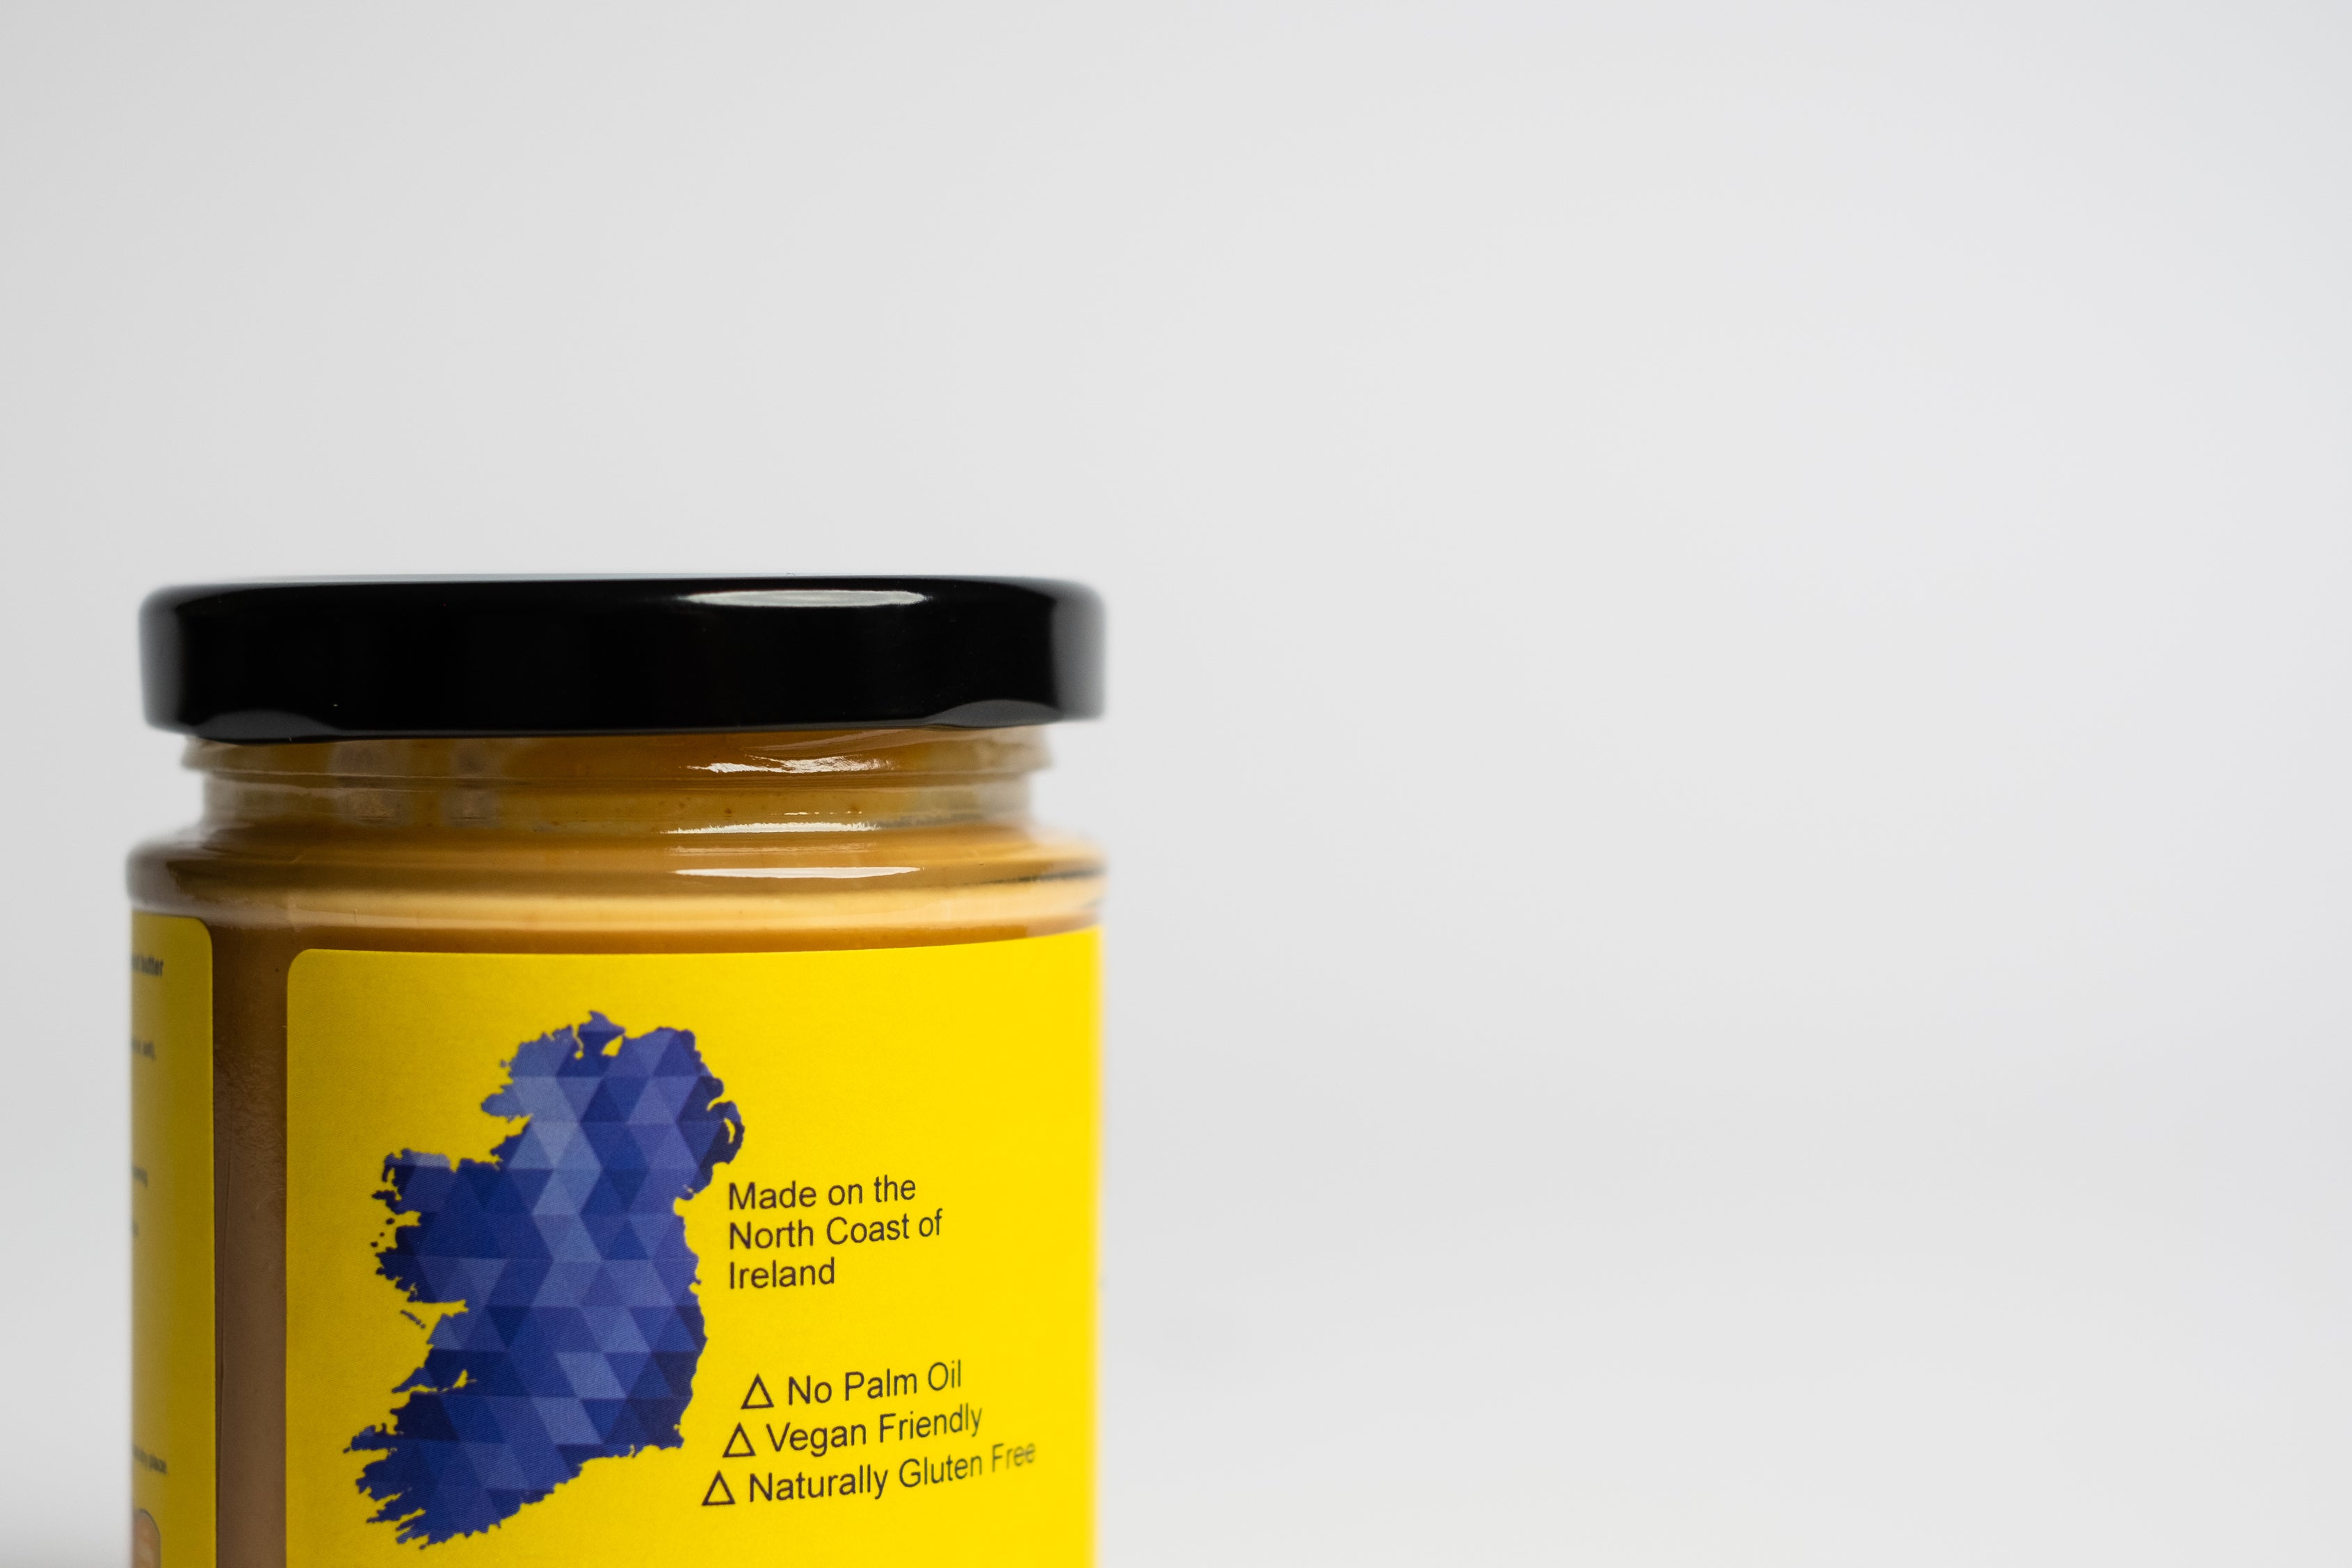 Award winning peanut butter made on the North Coast of Ireland